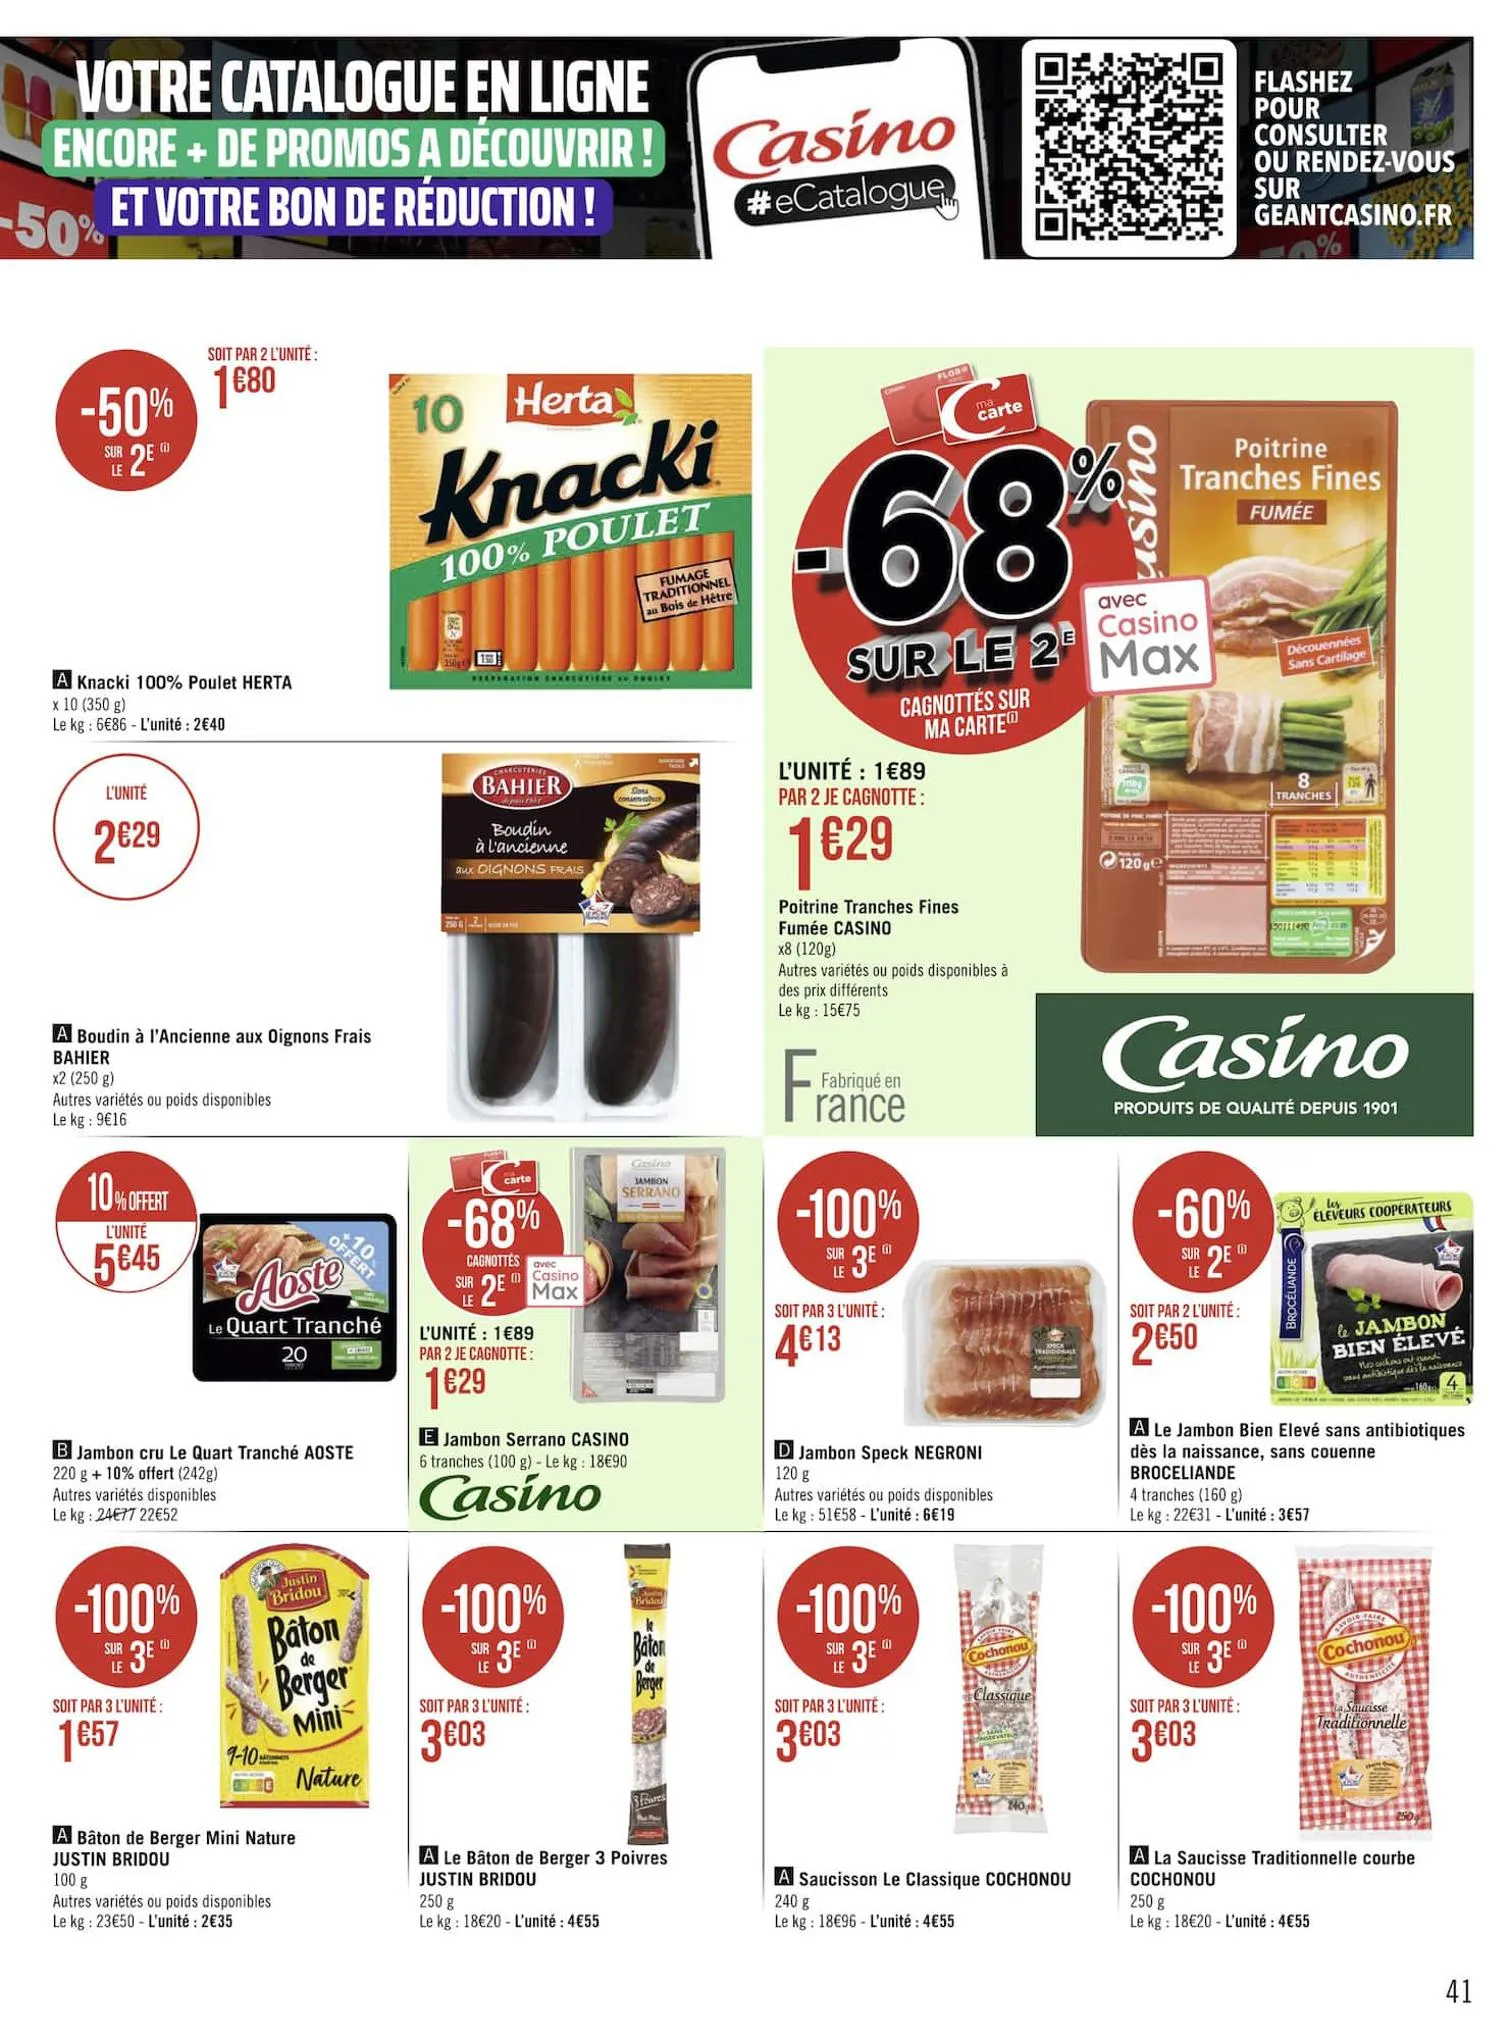 Catalogue Le mois casinomania, page 00041